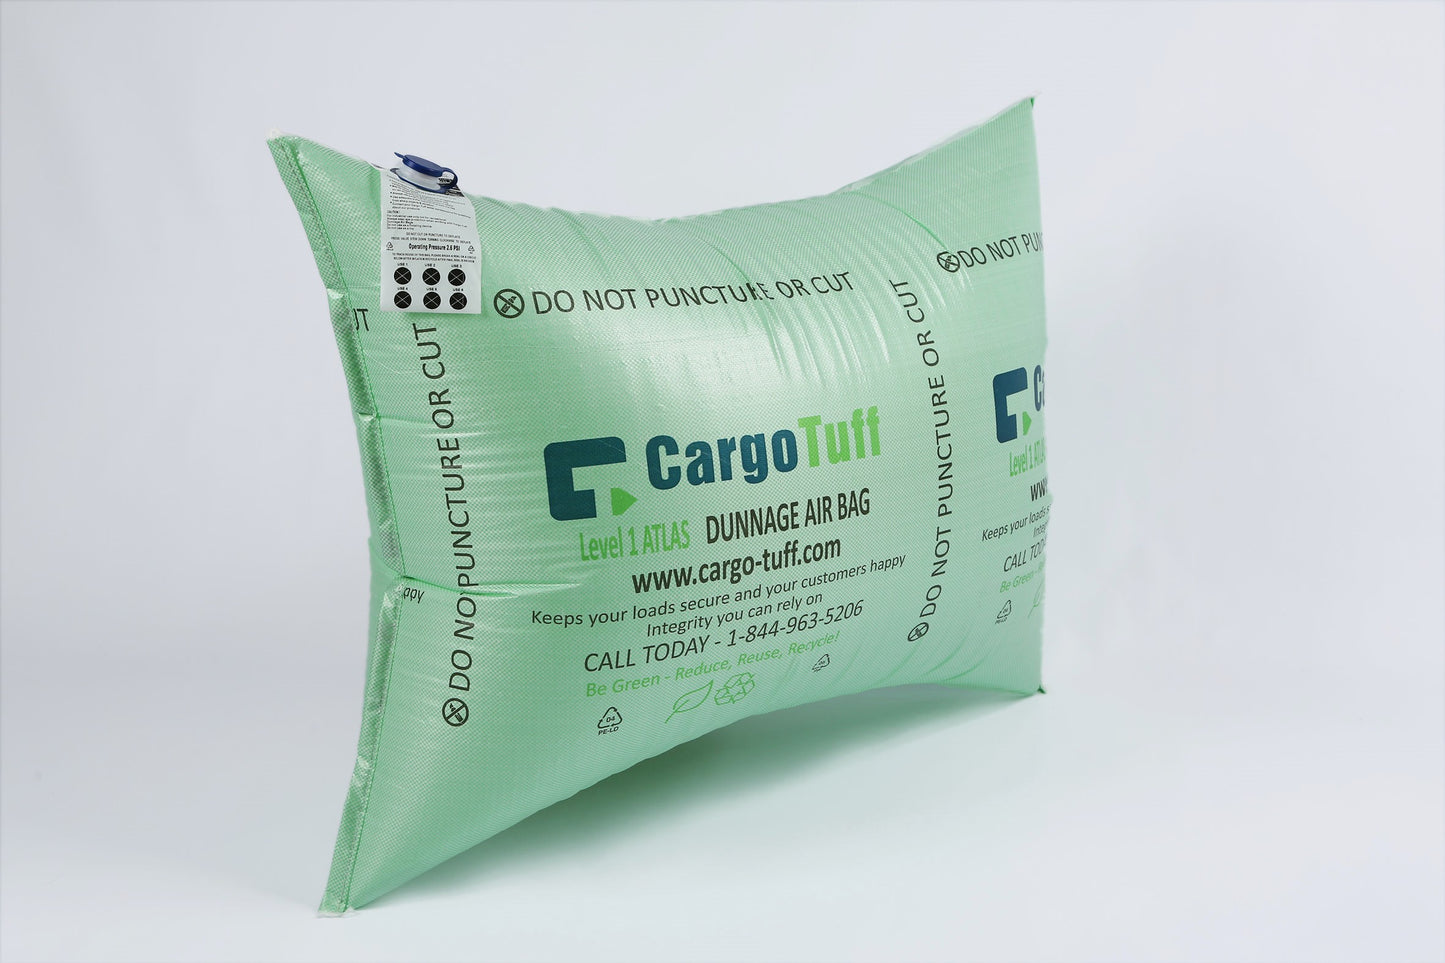 Level 1 48x48 Woven Polypropylene CargoTuff Dunnage Bag (10 pcs per box)